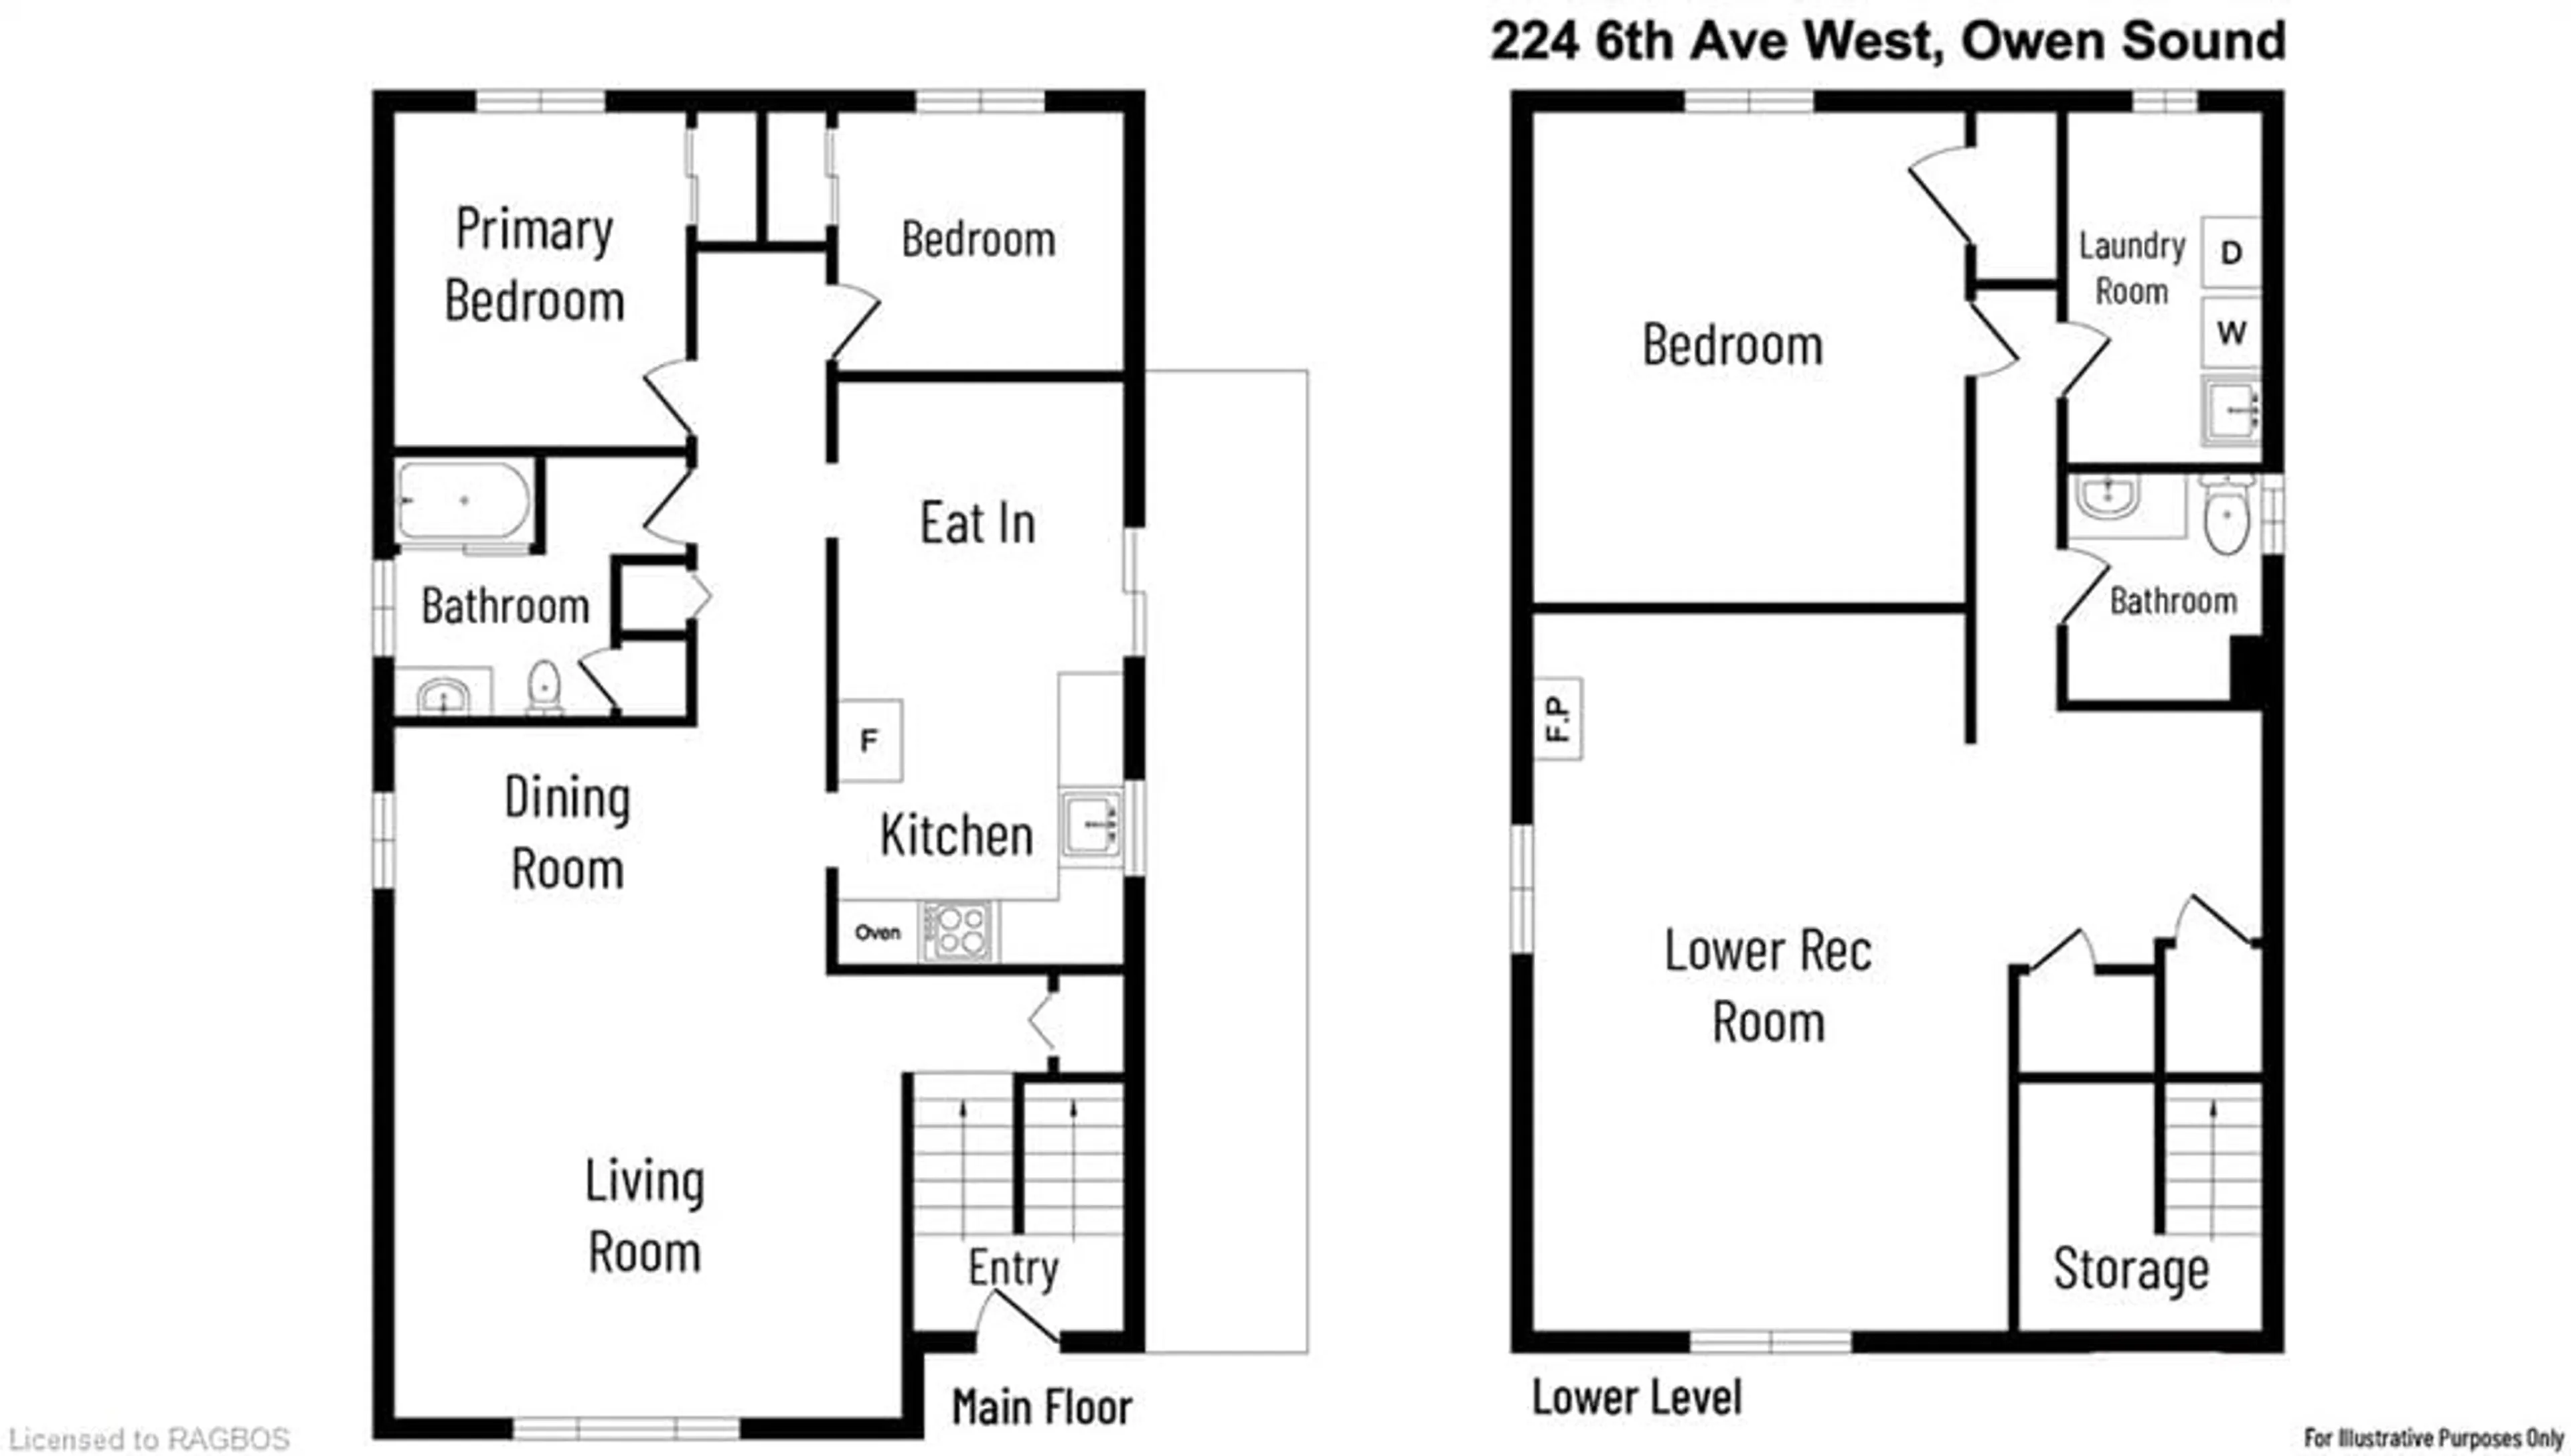 Floor plan for 224 6th Ave, Owen Sound Ontario N4K 6H5